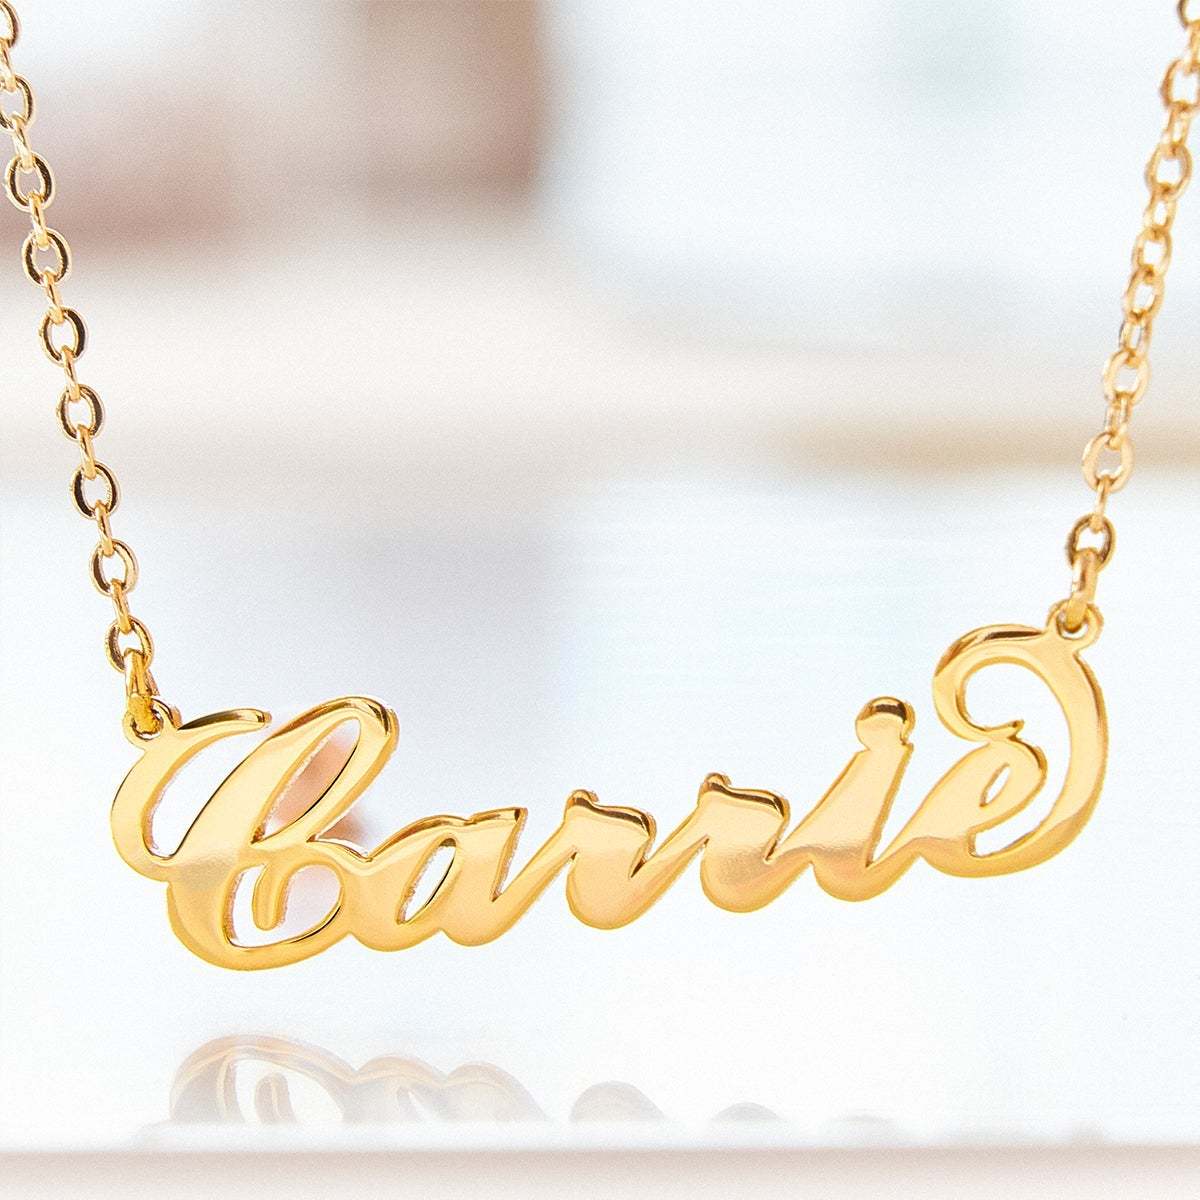 Colar Com Nome De Ouro Soufeel "Carrie" No Estilo "Carrie" Presentes De Natal